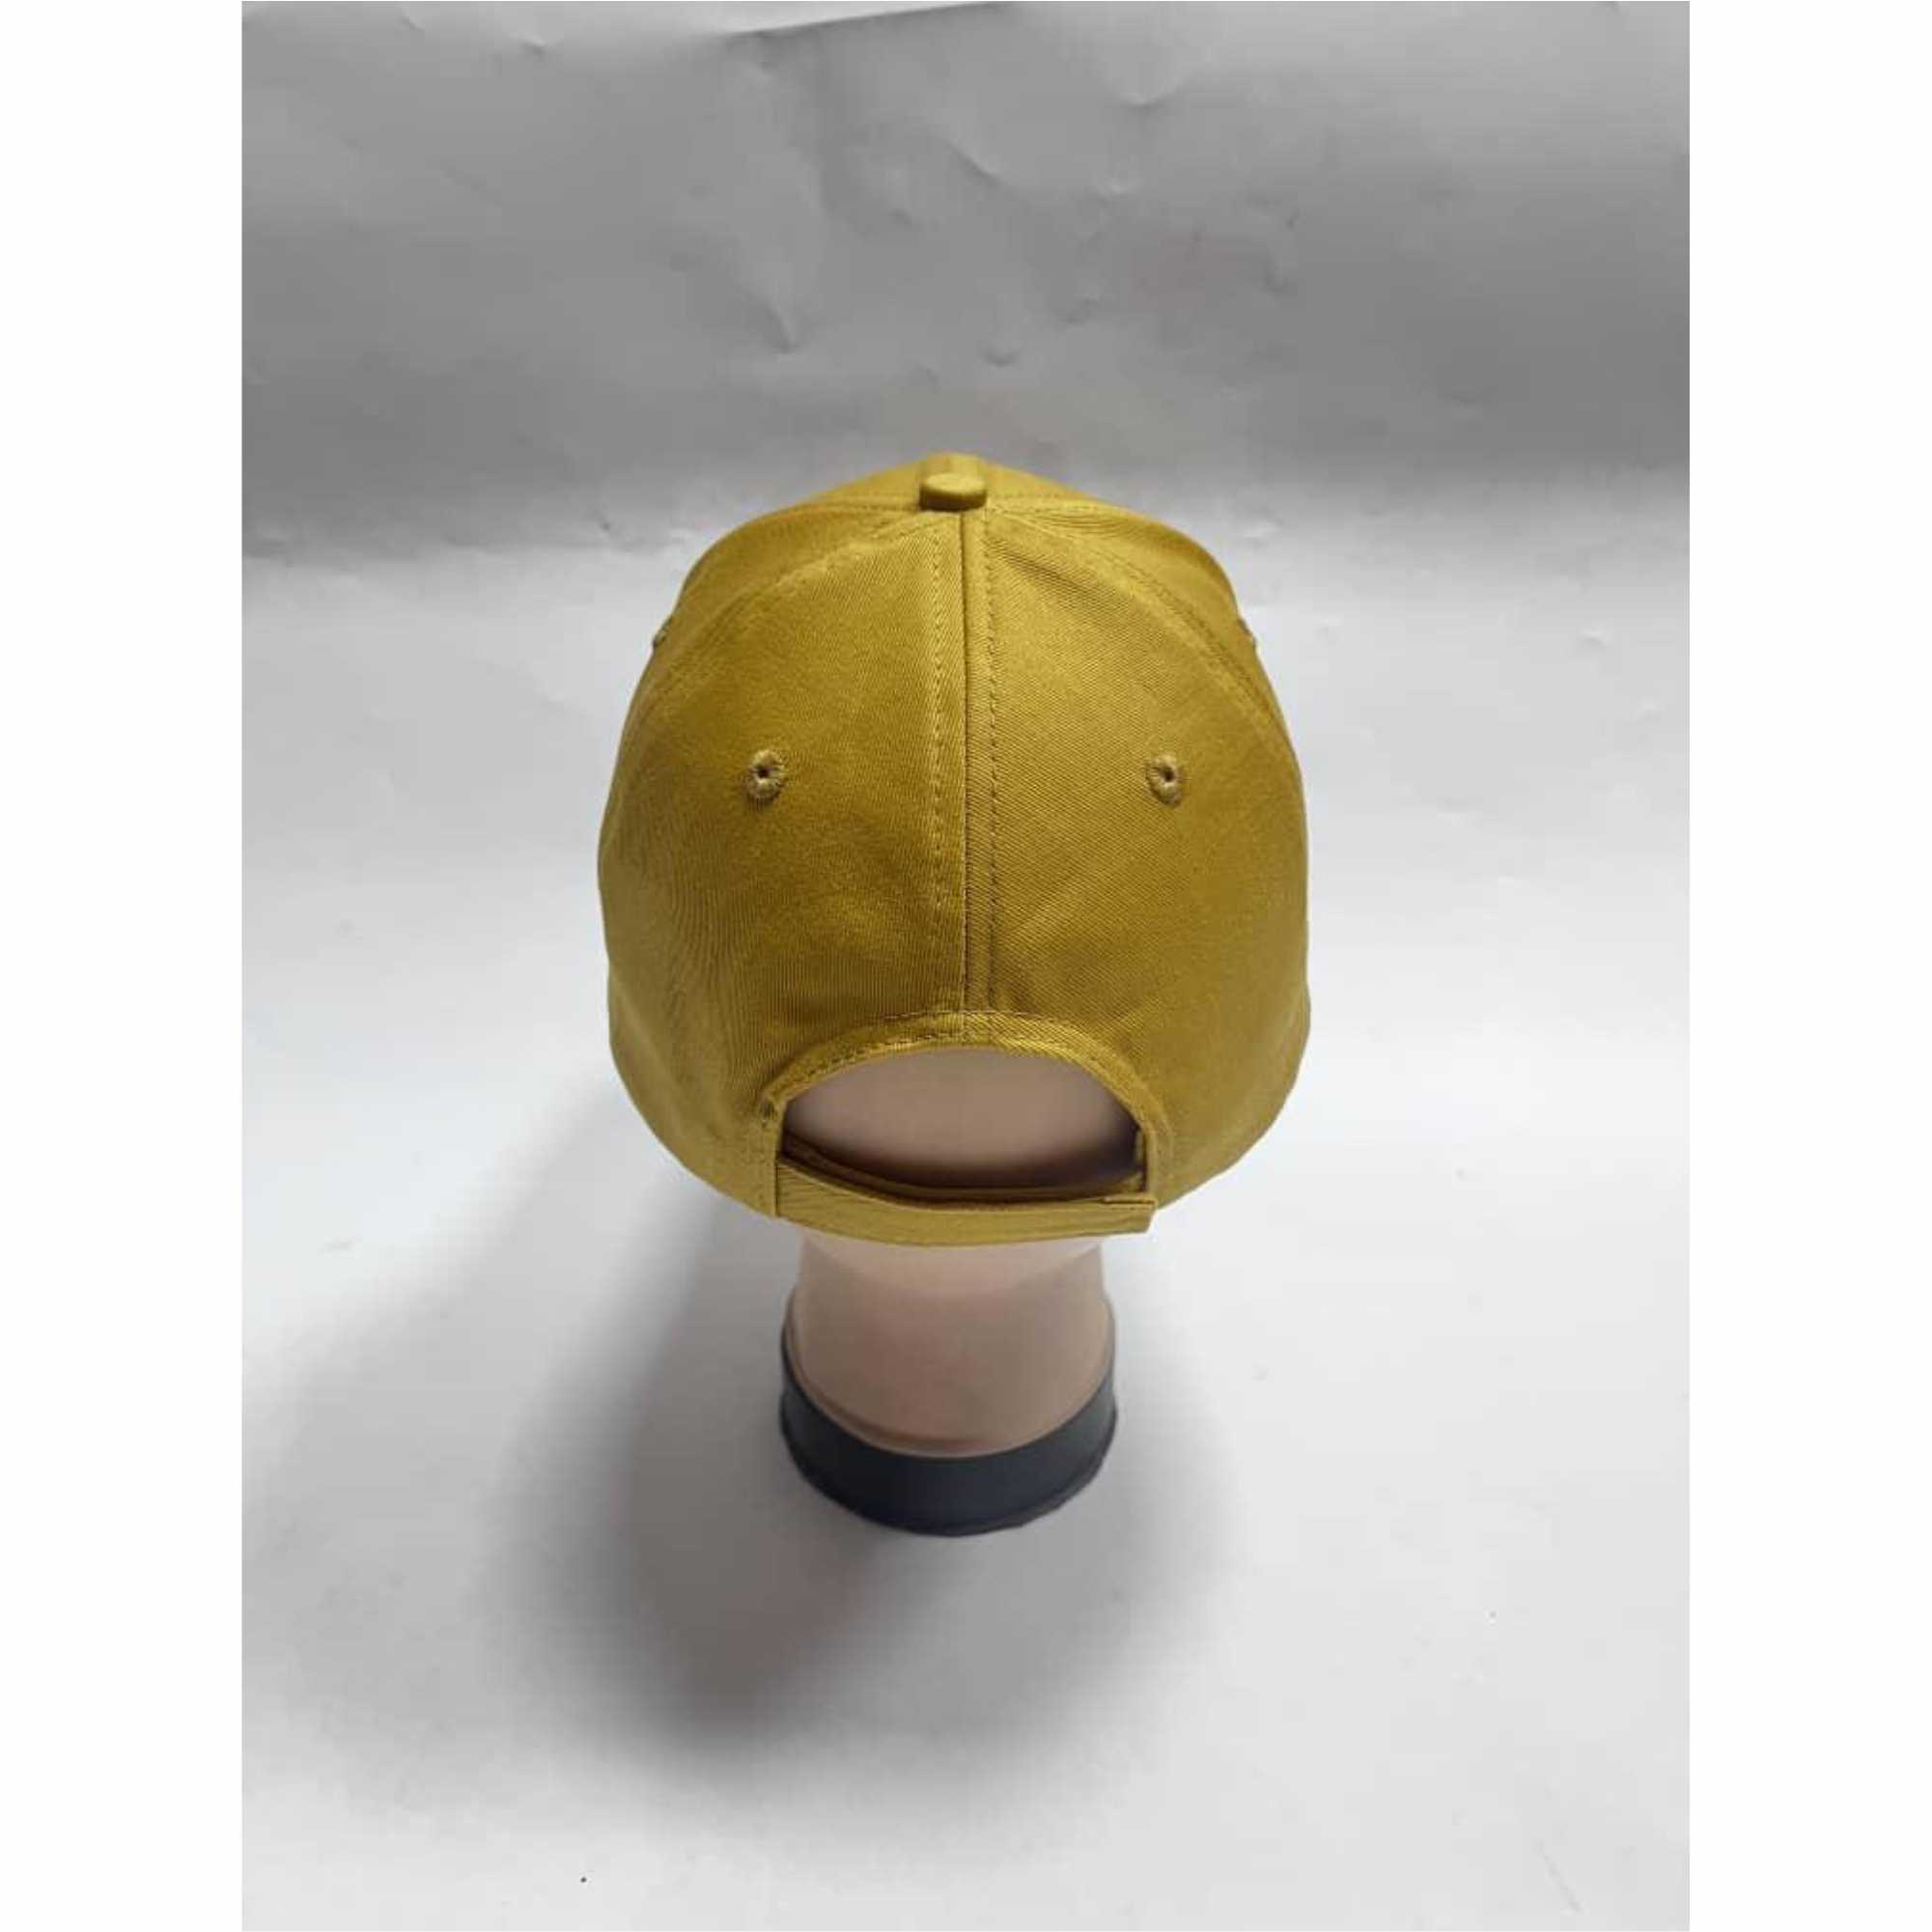 Unique Custom Made Old Gold Baseball Cap